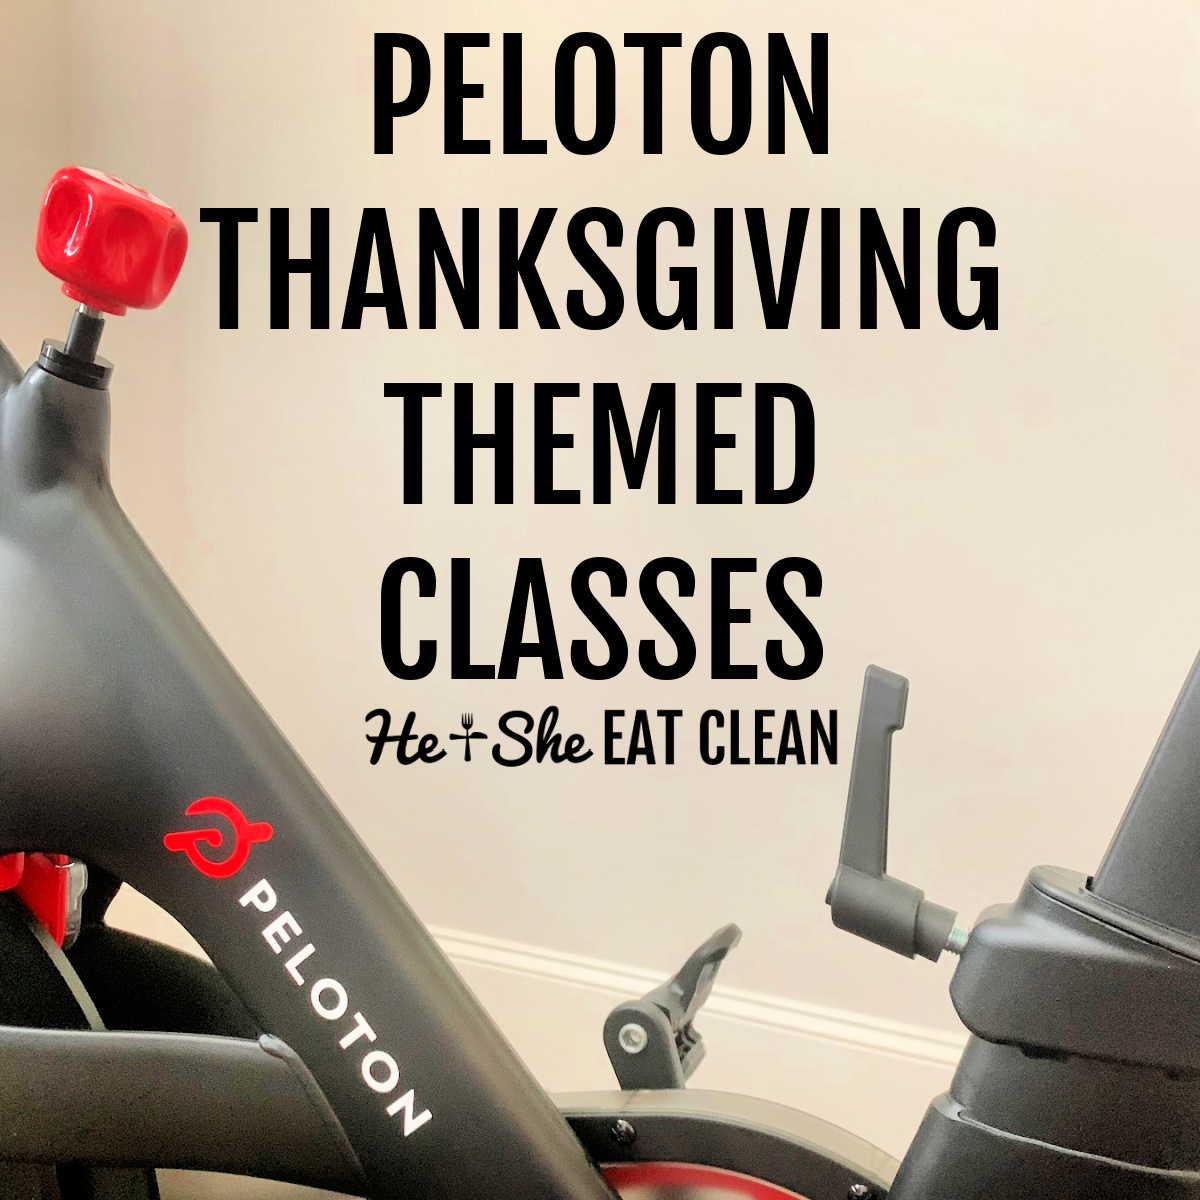 Peloton Thanksgiving Classes